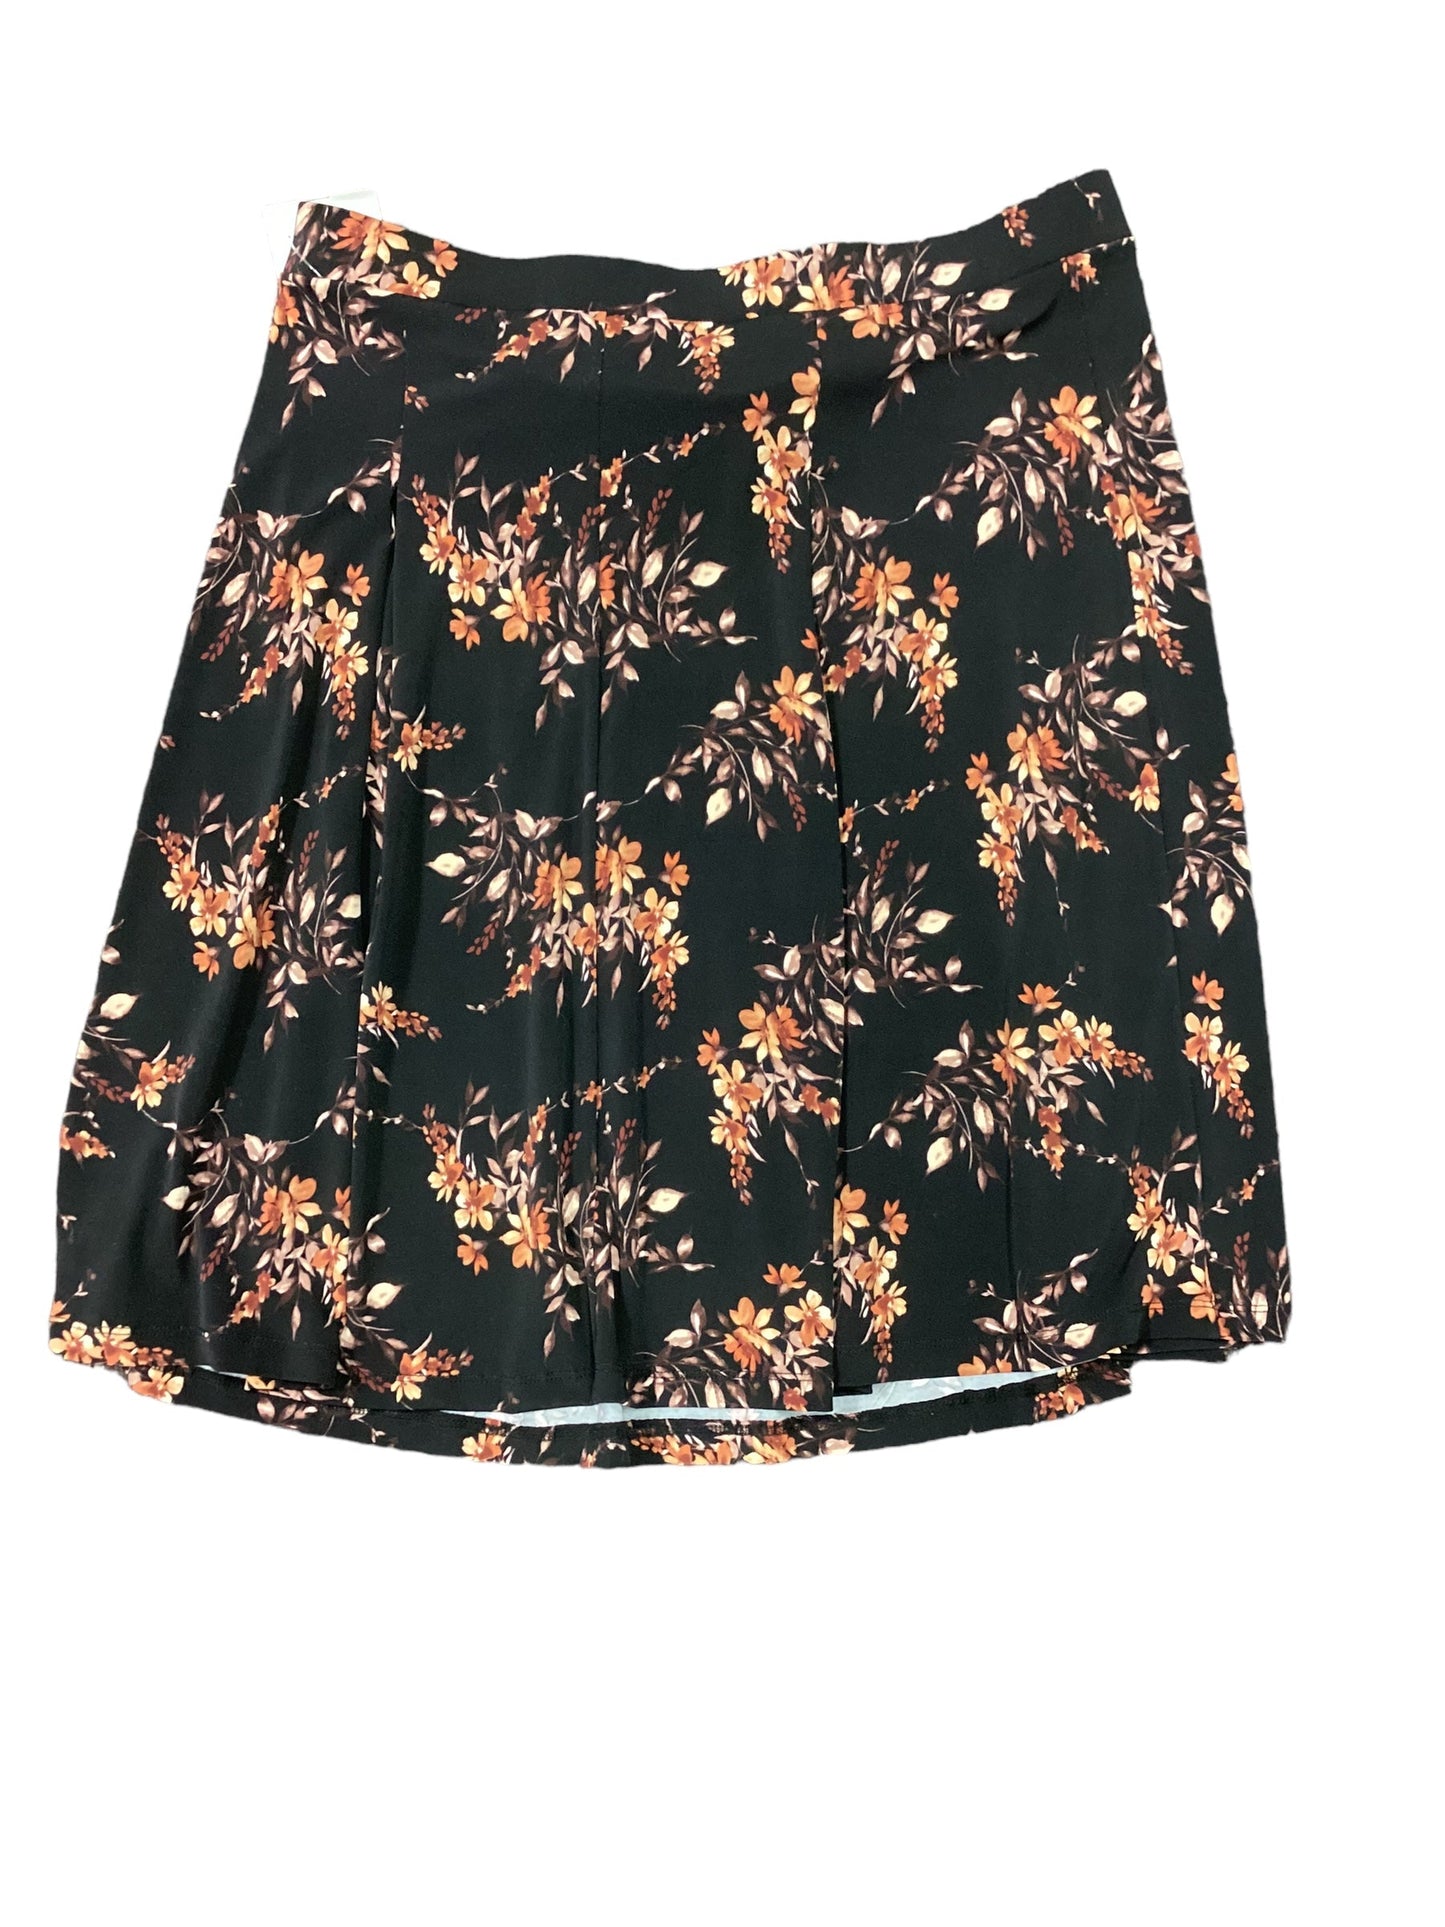 Skirt Midi By Gilli  Size: 1x